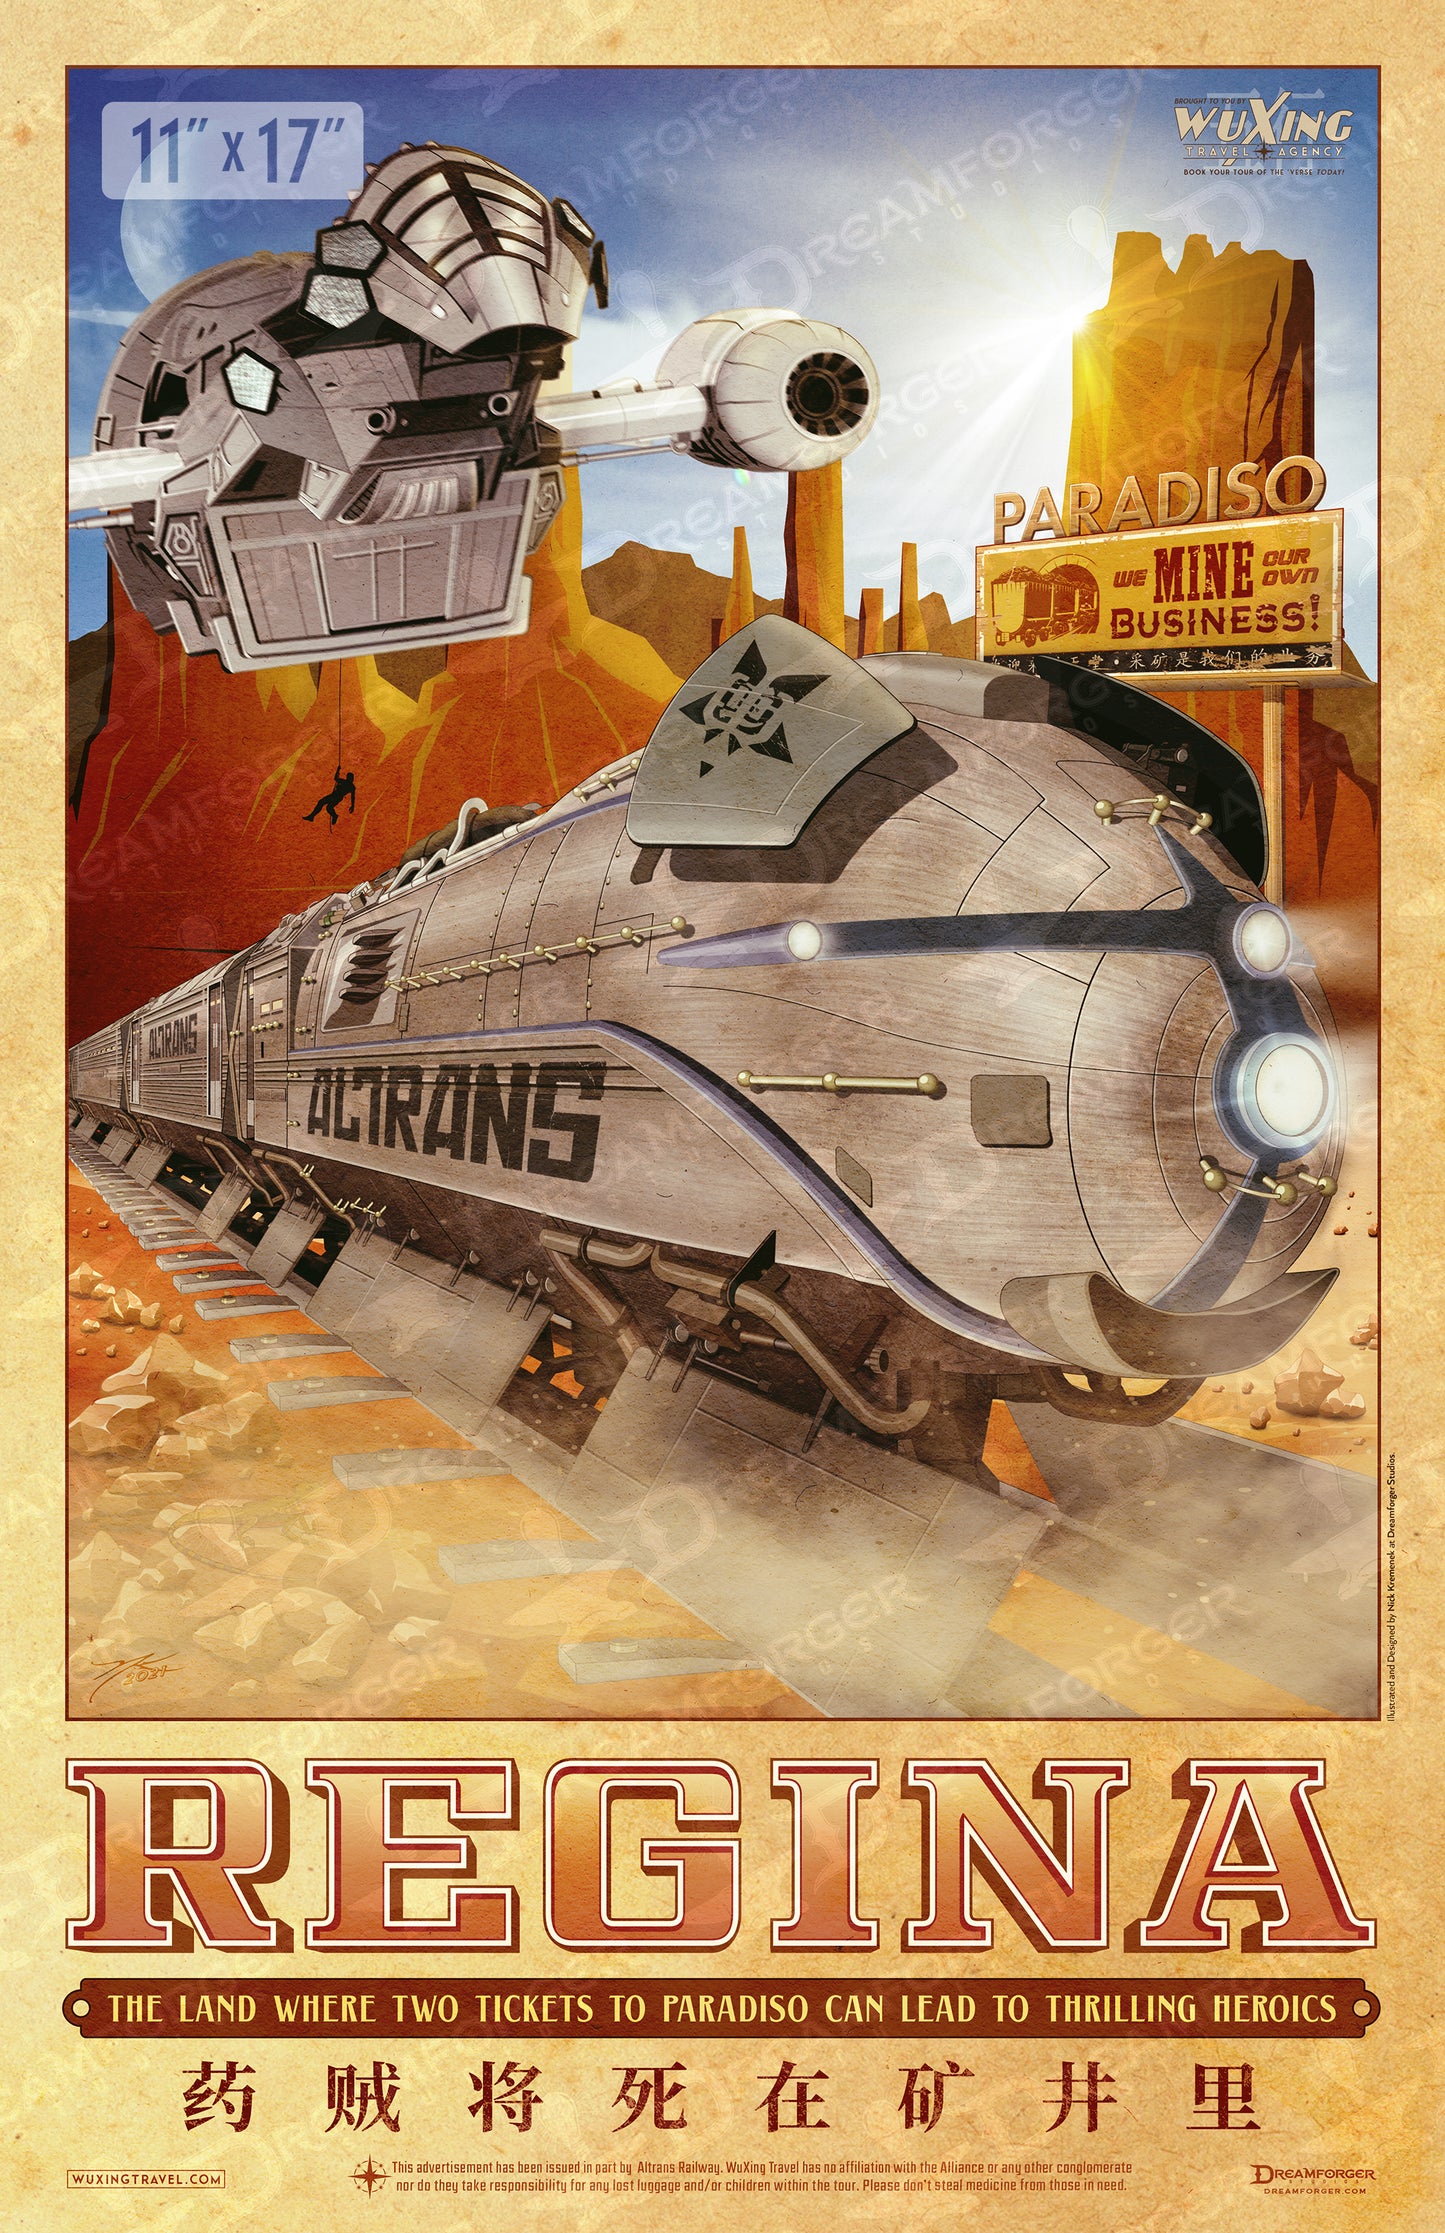 "Regina" Planetary Travel Poster (WuXing Travel Agency series)